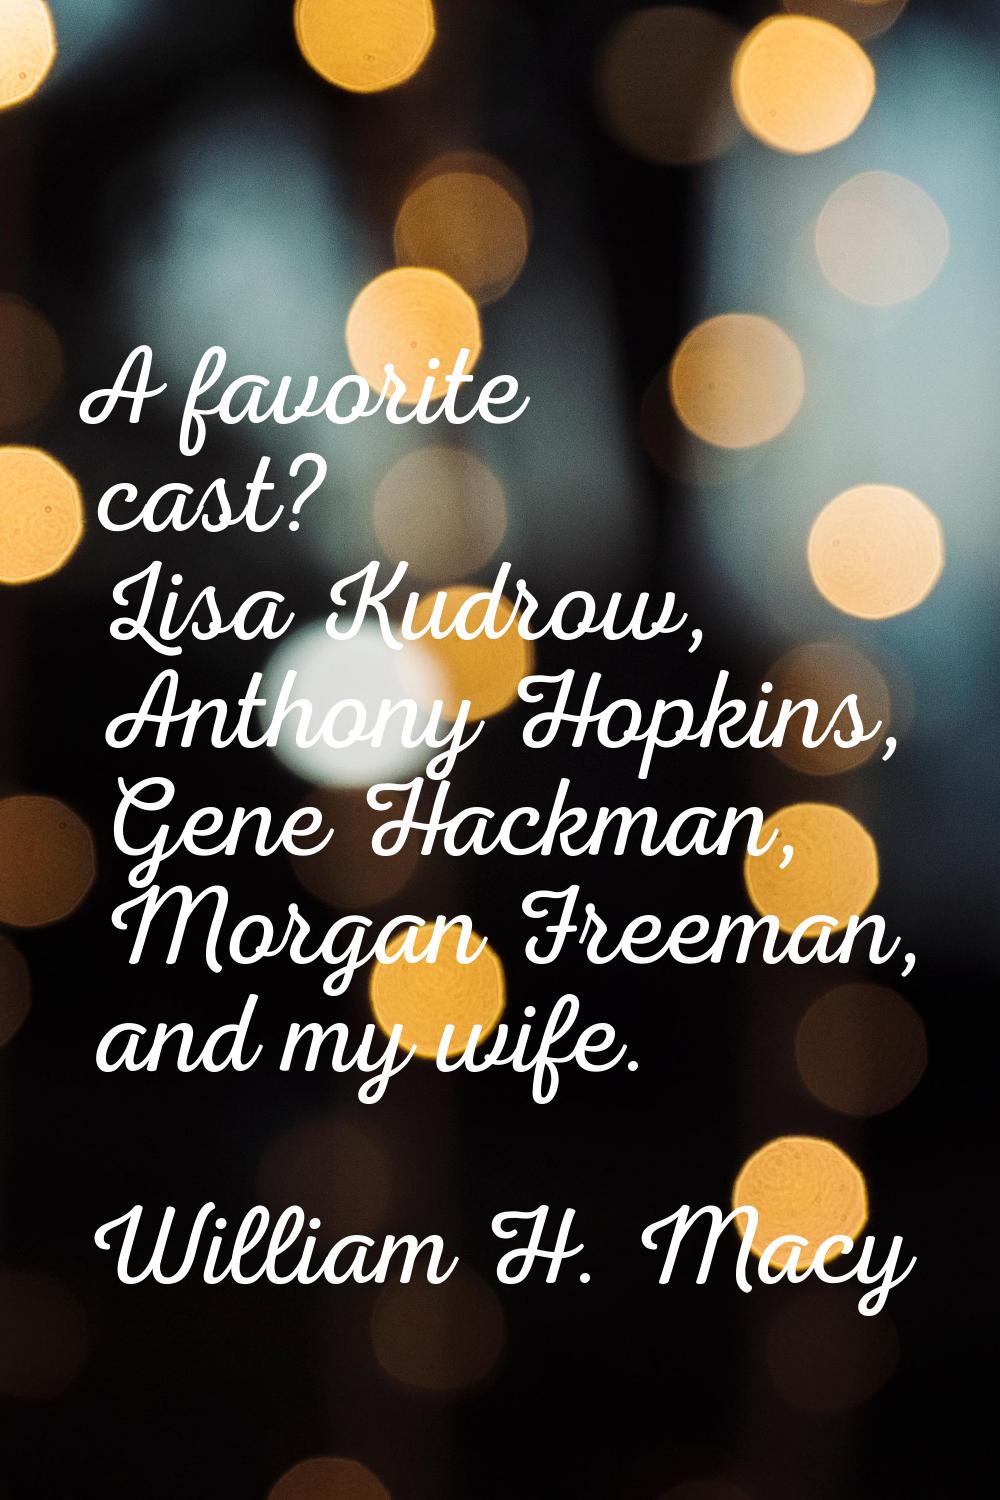 A favorite cast? Lisa Kudrow, Anthony Hopkins, Gene Hackman, Morgan Freeman, and my wife.